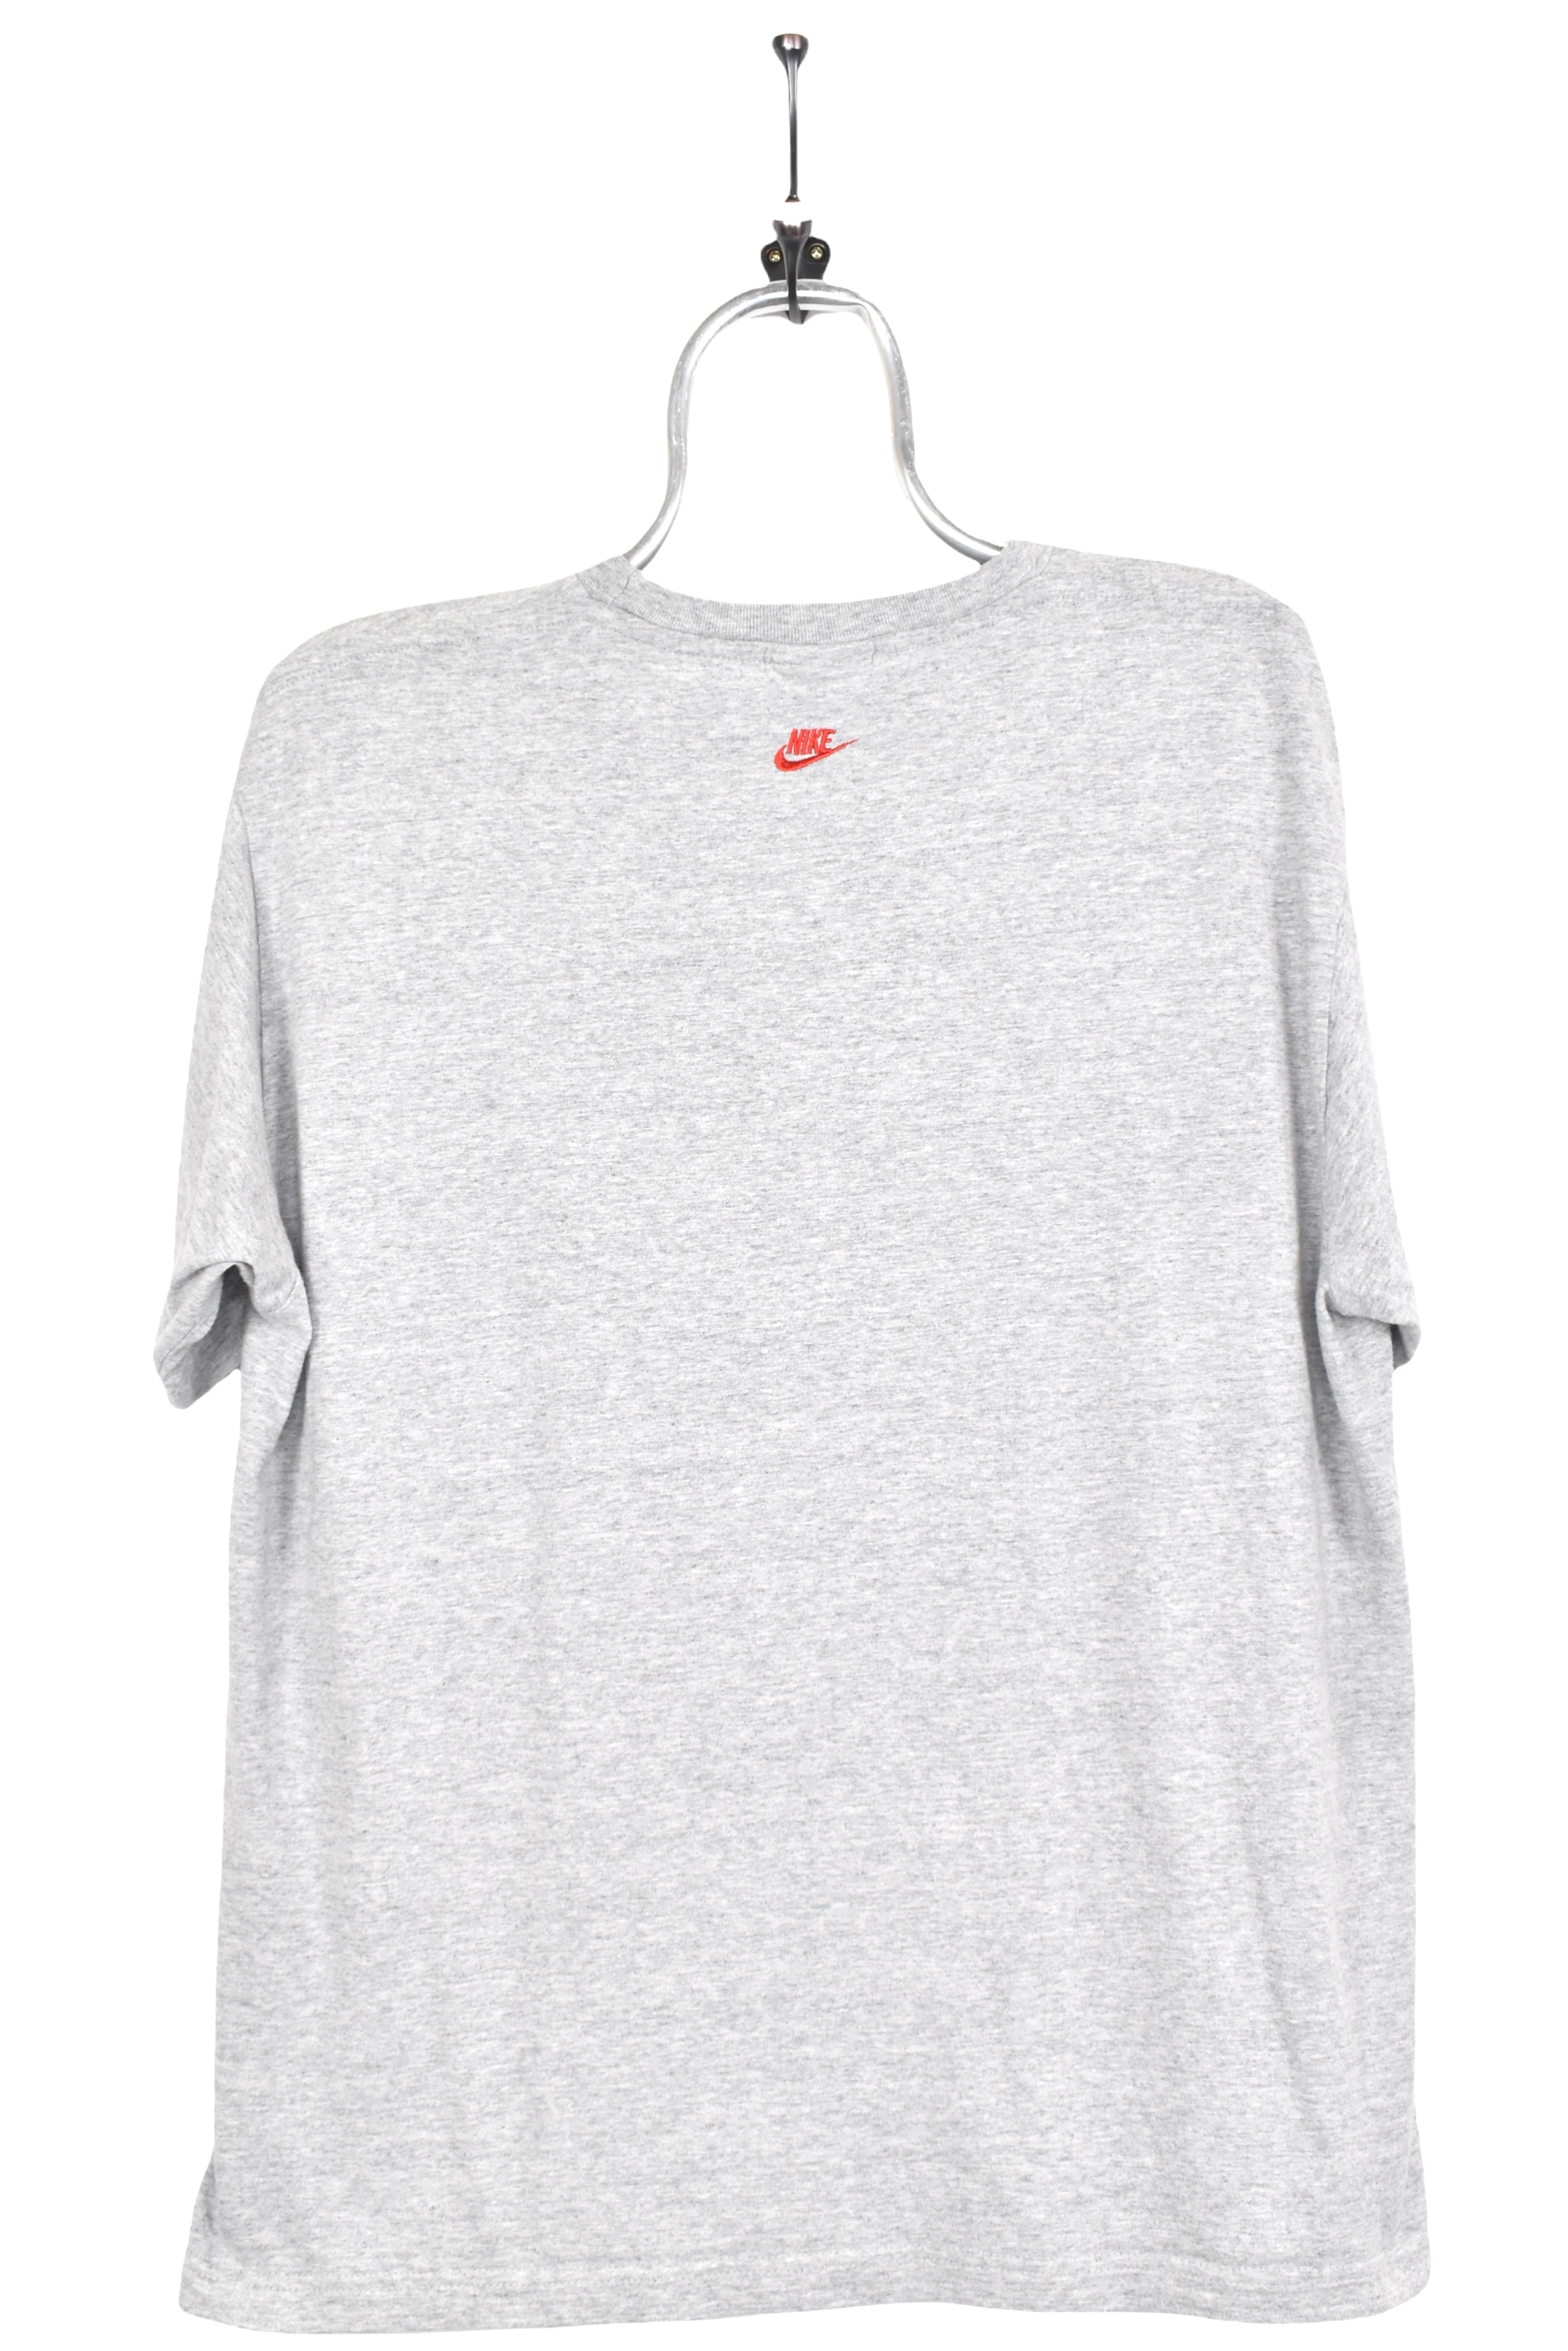 Vintage Nike shirt, grey graphic tee - AU L NIKE